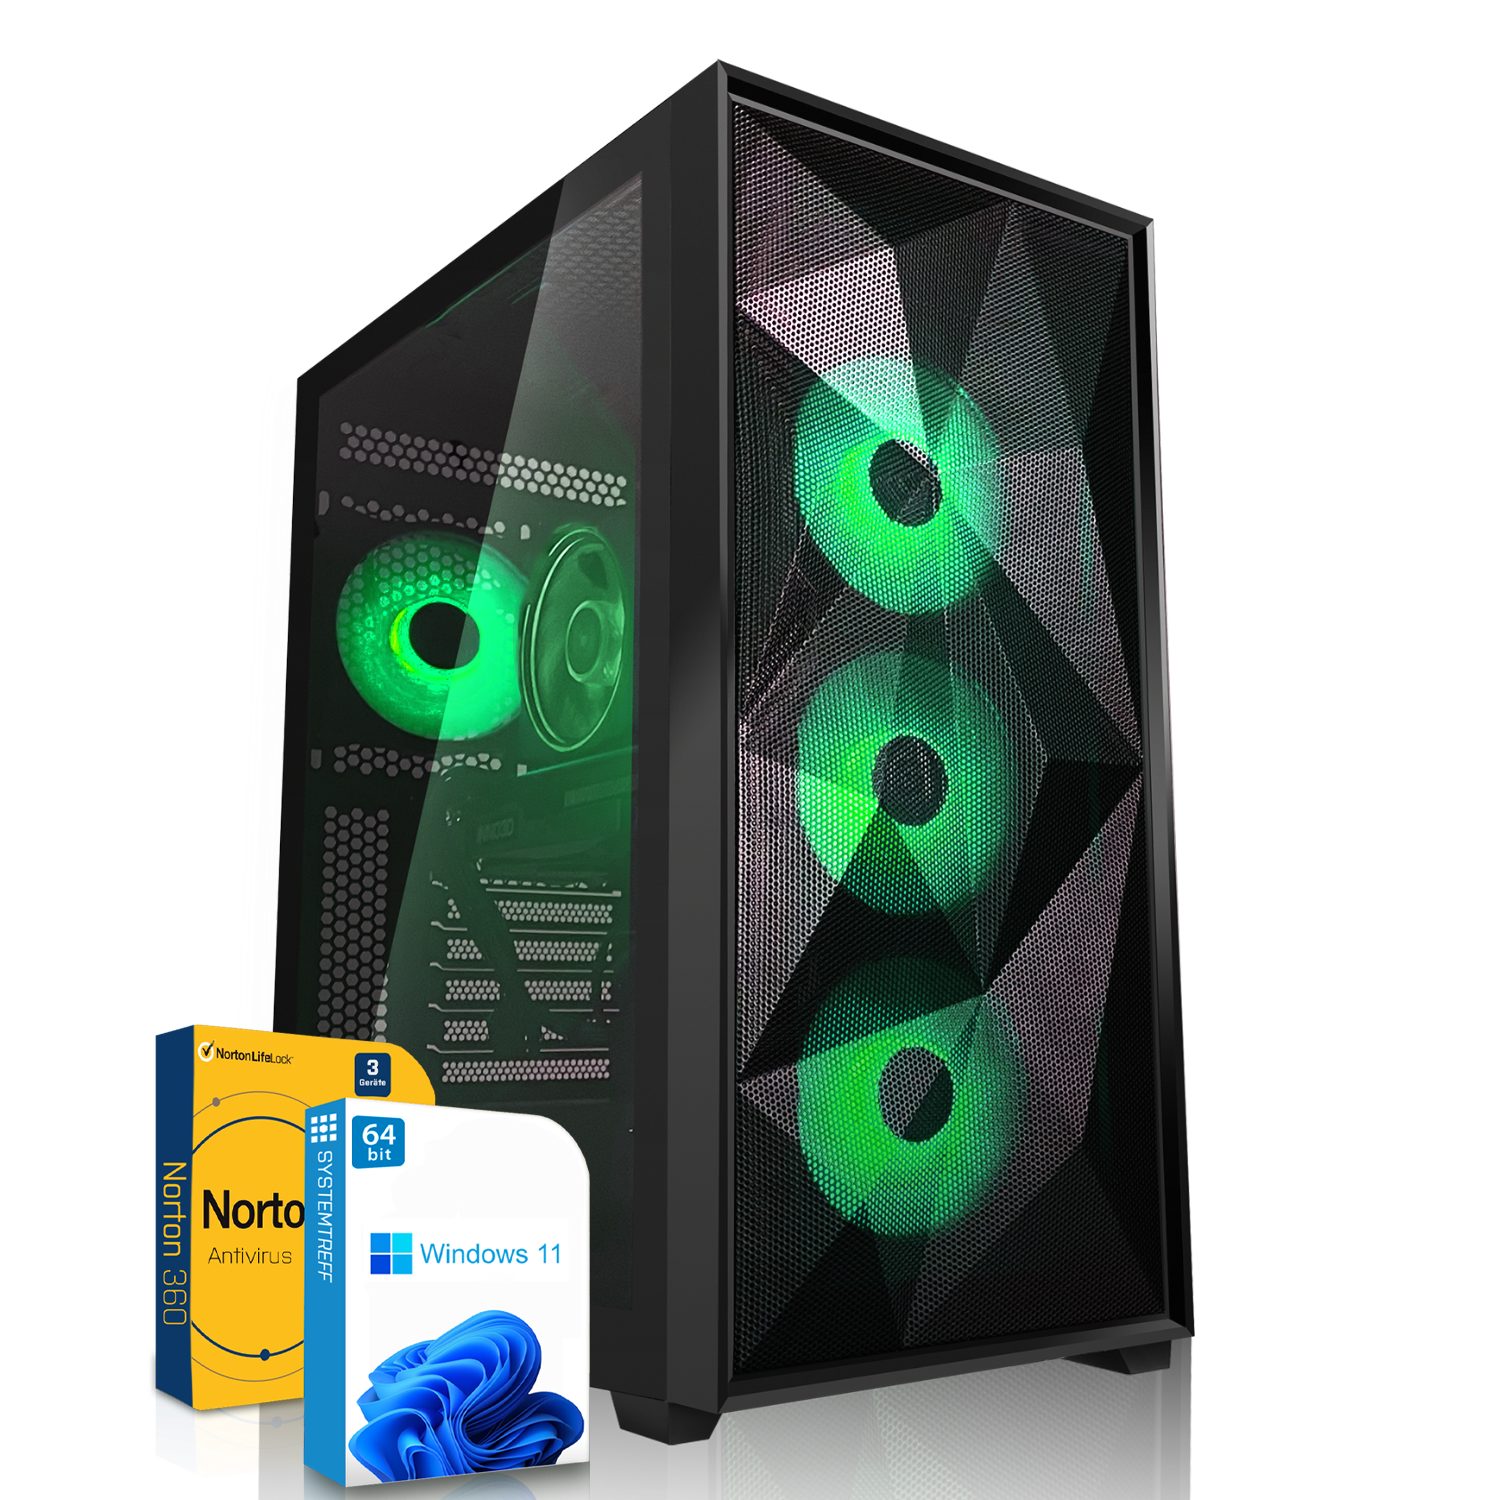 SYSTEMTREFF High-End Gaming GB Ryzen AMD 3080 PC 32 5800X, mSSD, Pro, RTX™ Ryzen™ GB 7 Windows mit Gaming NVIDIA GeForce 1000 11 AMD RAM, Prozessor, 7